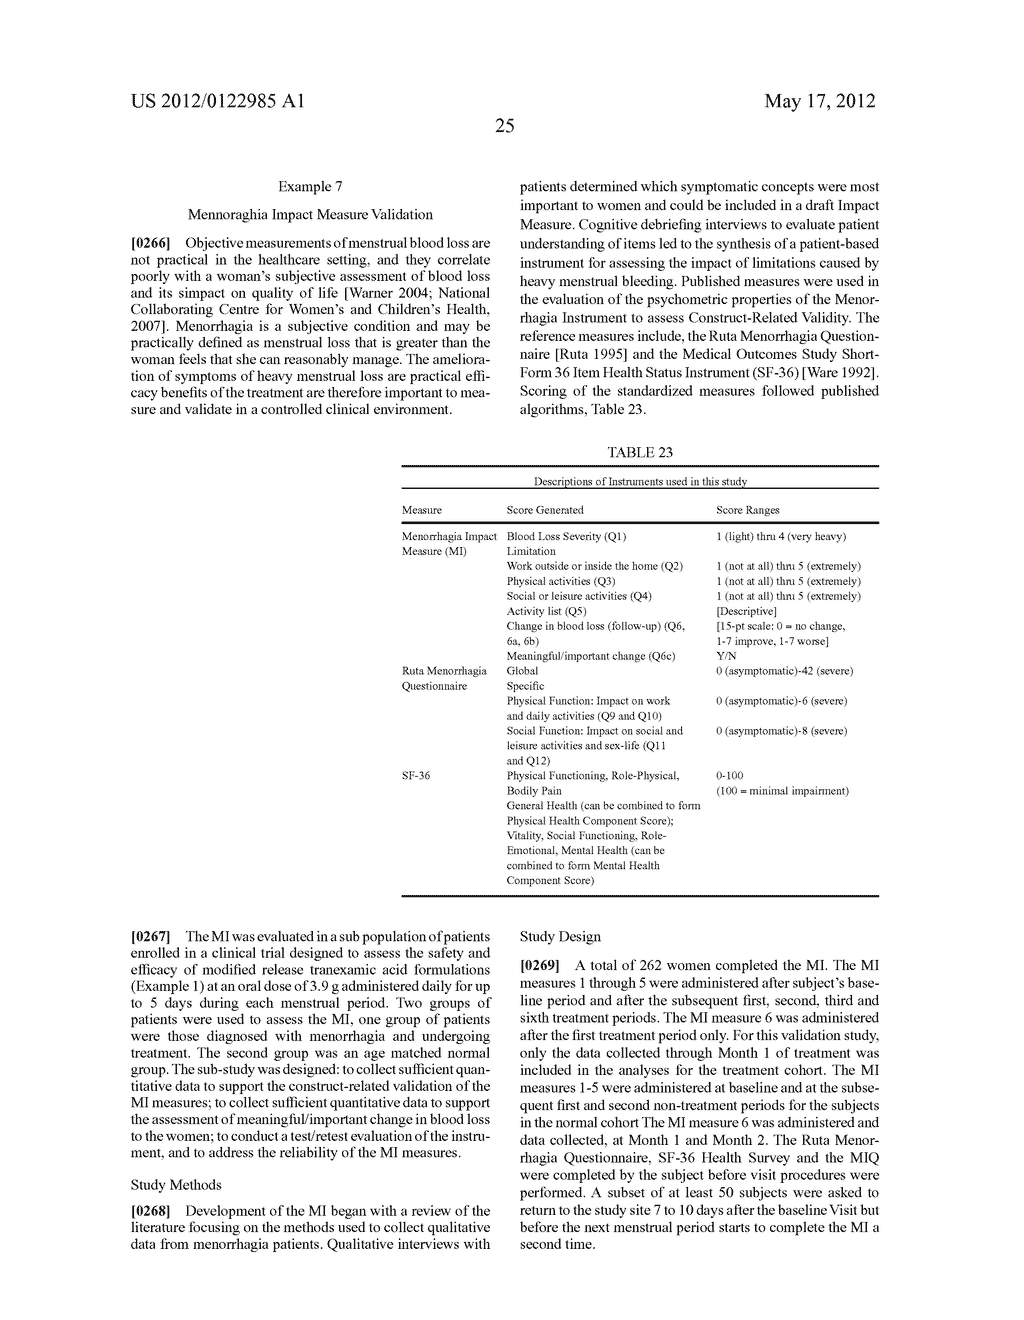 Tranexamic Acid Formulations - diagram, schematic, and image 33